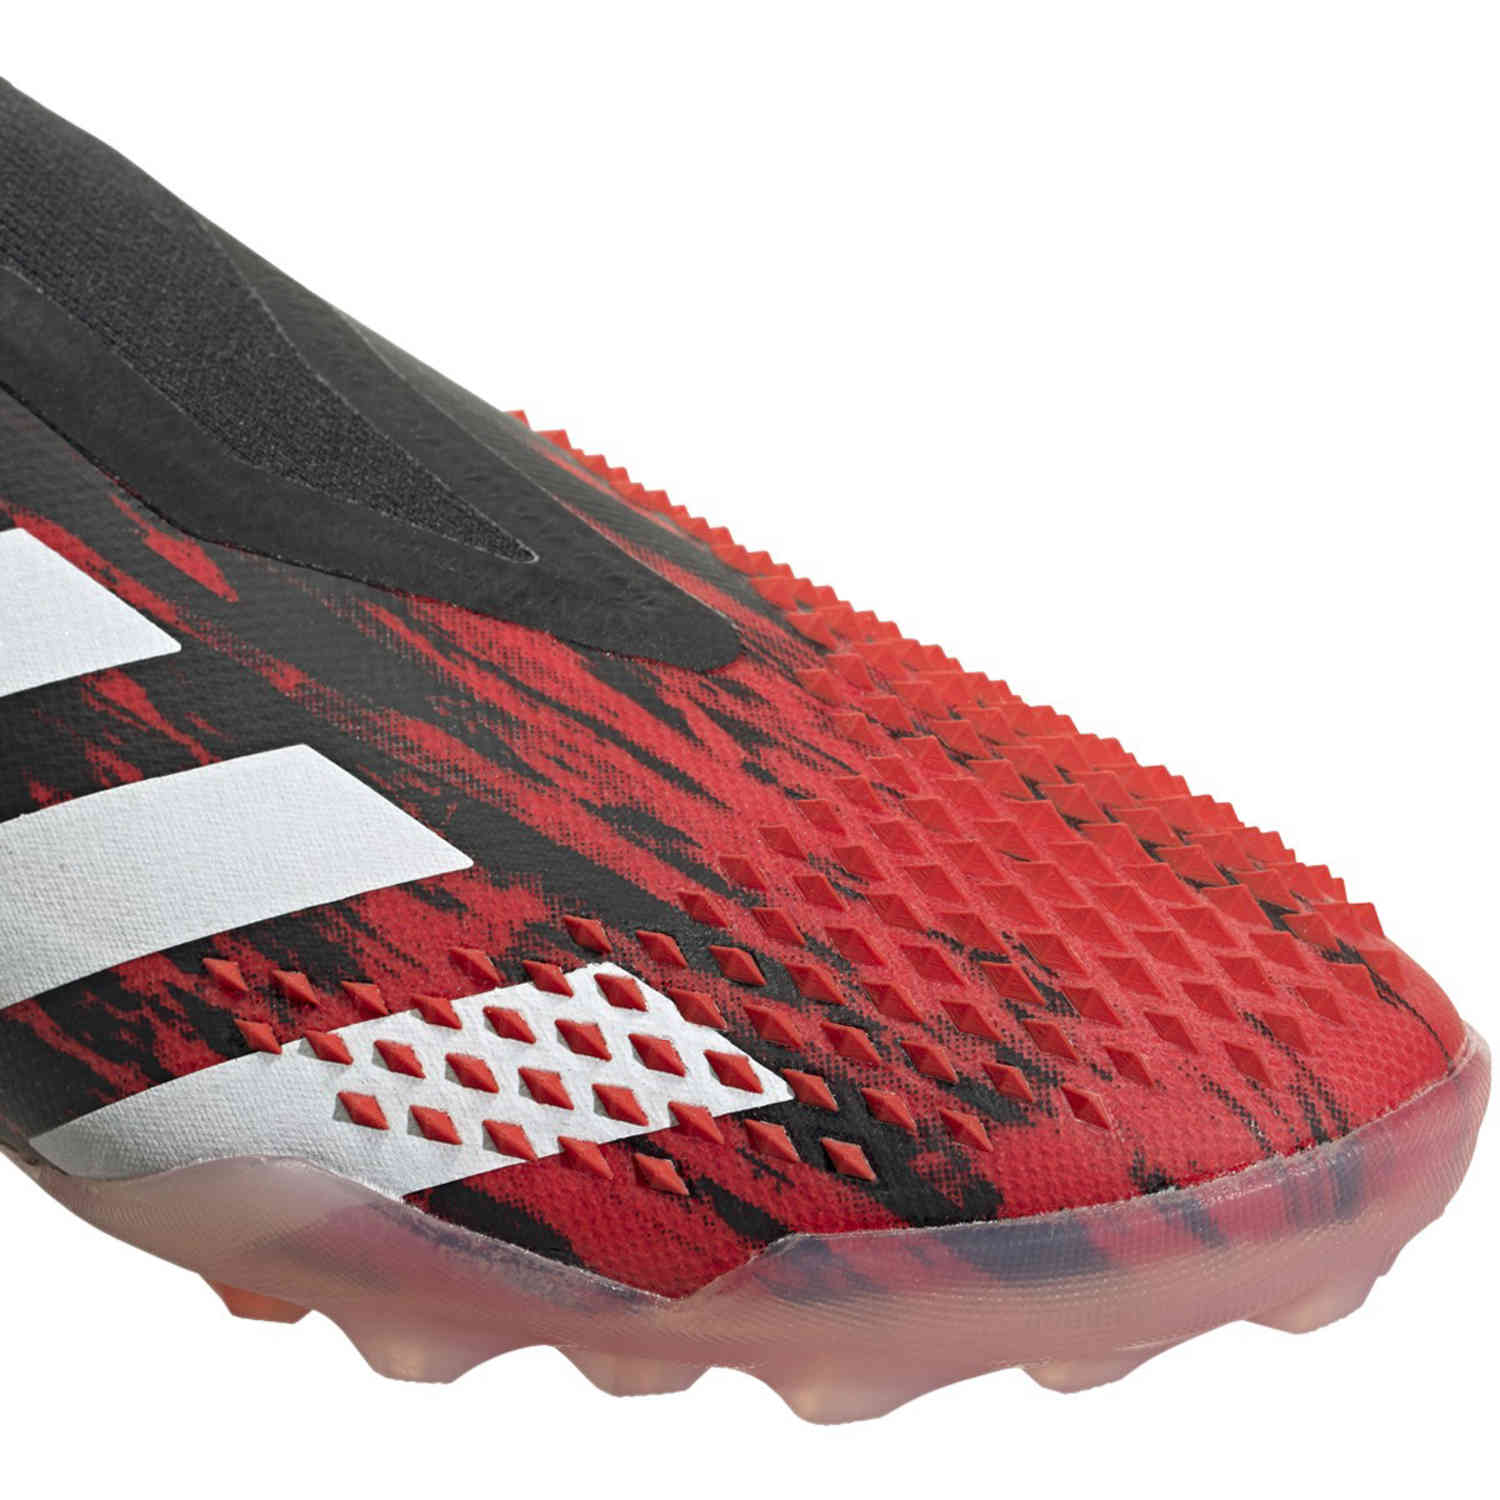 Adidas Predator 20+ Turf White Black Pop football boots.